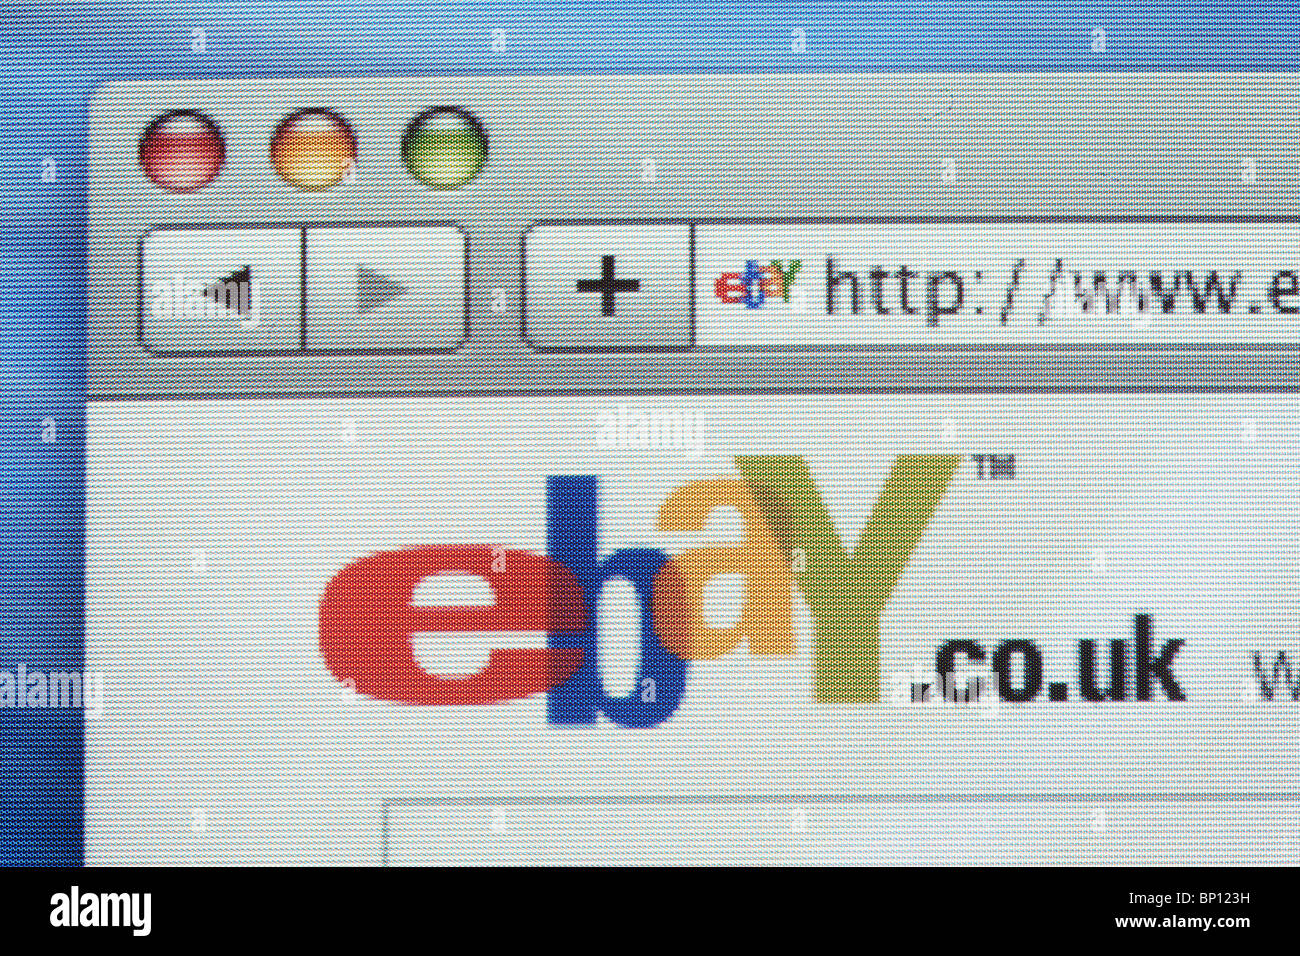 ebay.co.uk website, seen on computer screen Stock Photo